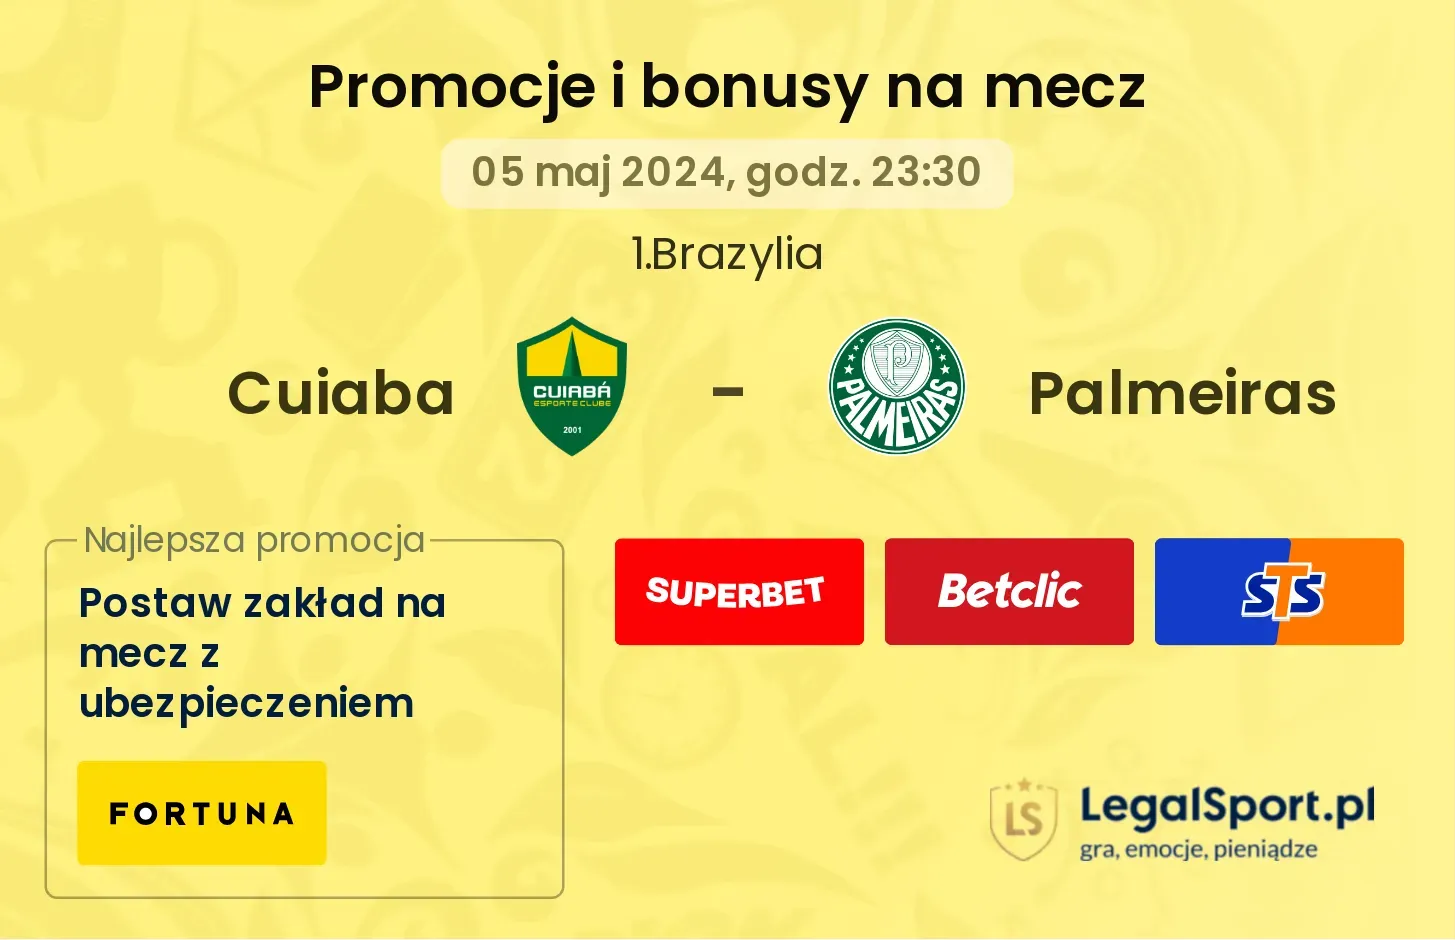 Cuiaba - Palmeiras promocje bonusy na mecz